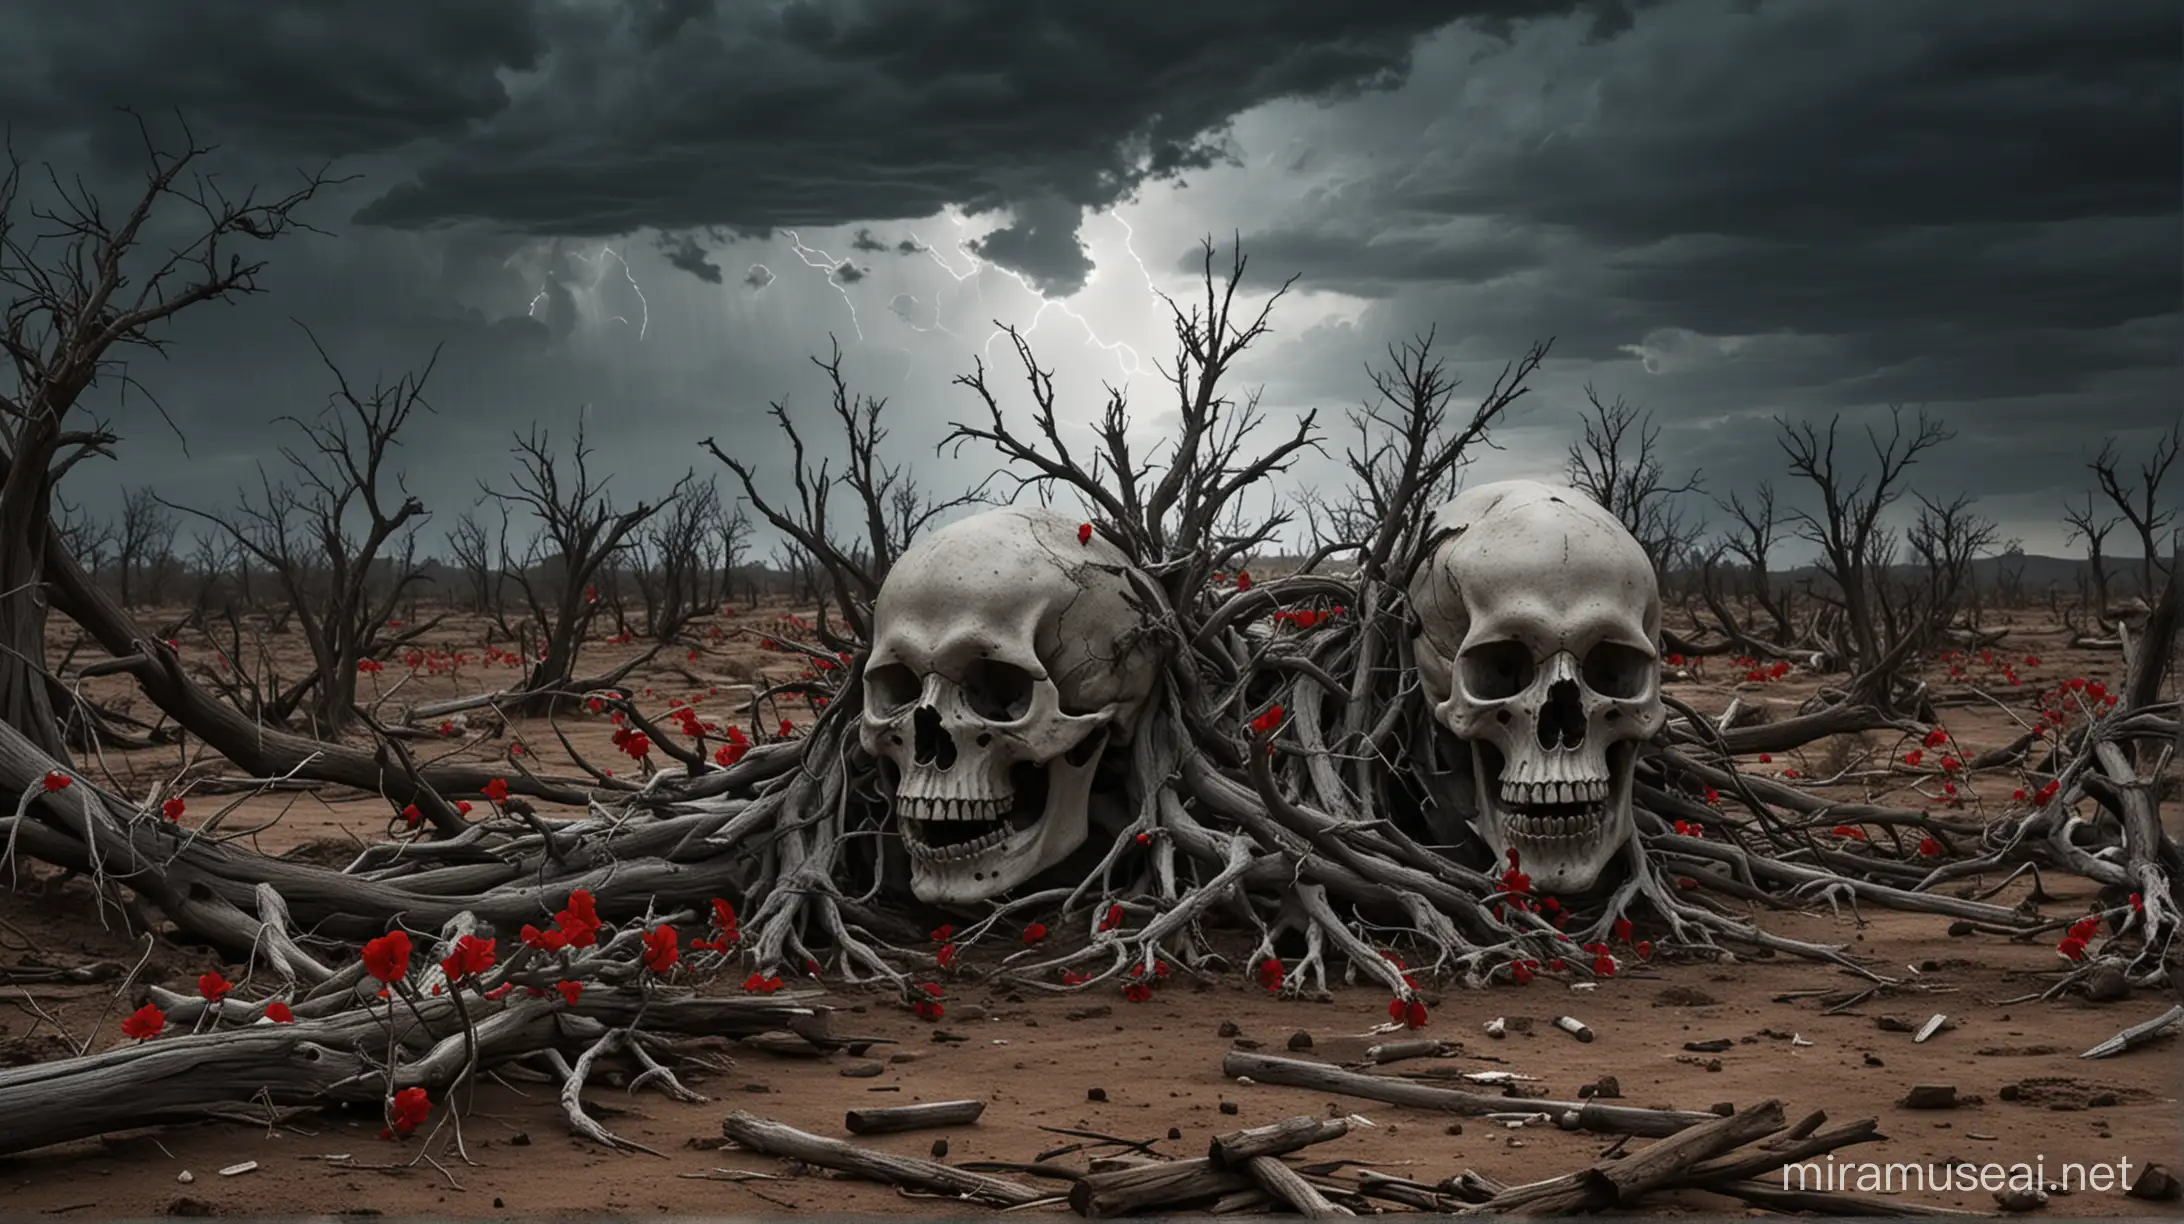 Barren Landscape with Skull Trees Symbolic Depiction of Struggle and Hope